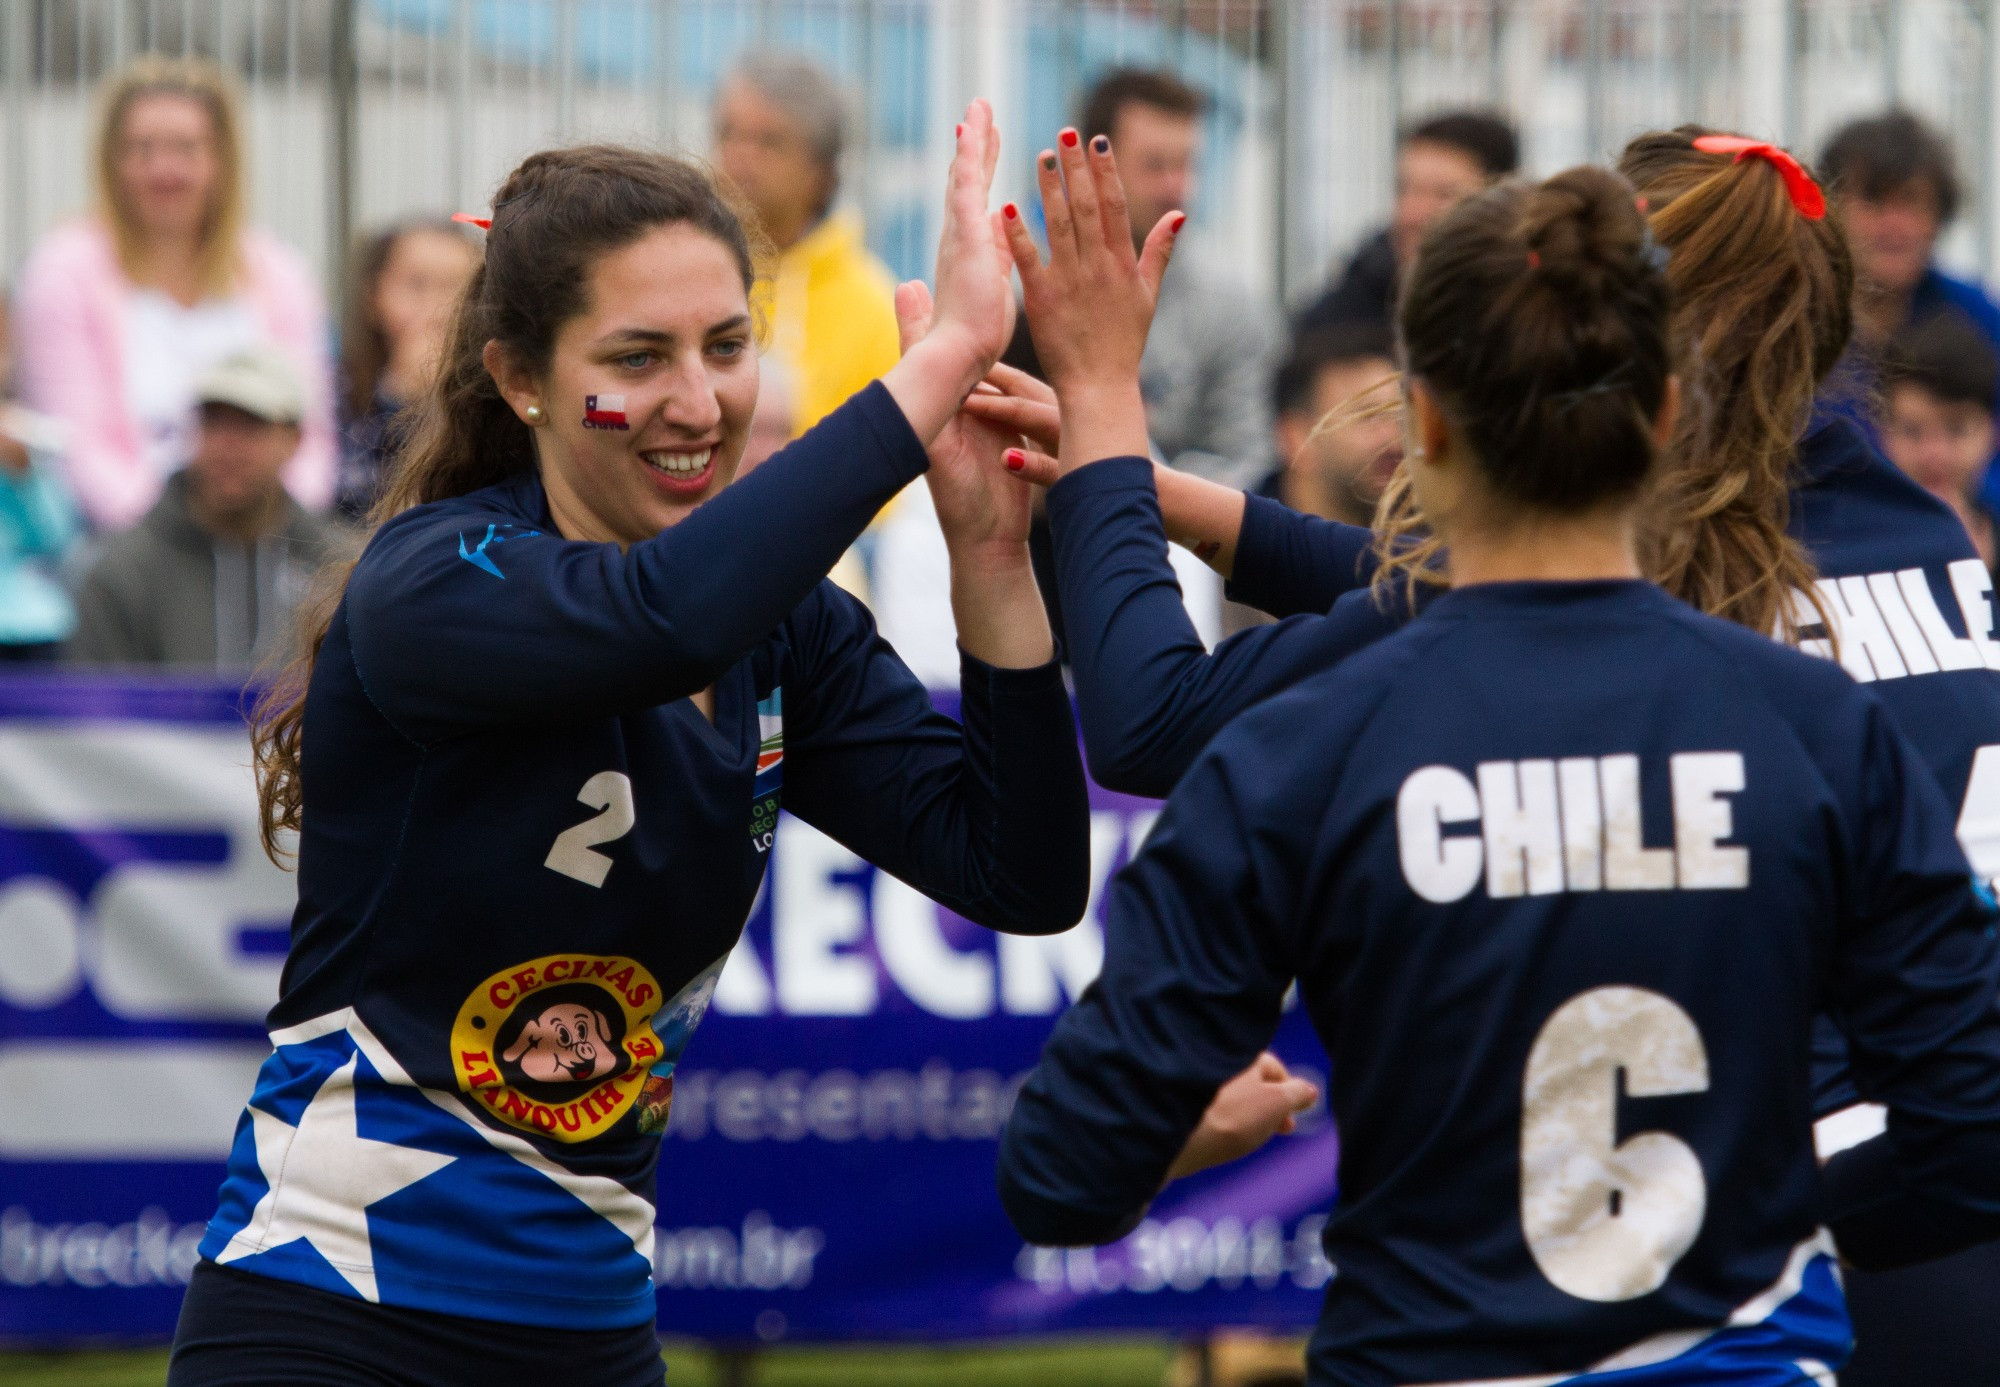 International Fistball Association award 2020 Women's World Championship to Chile